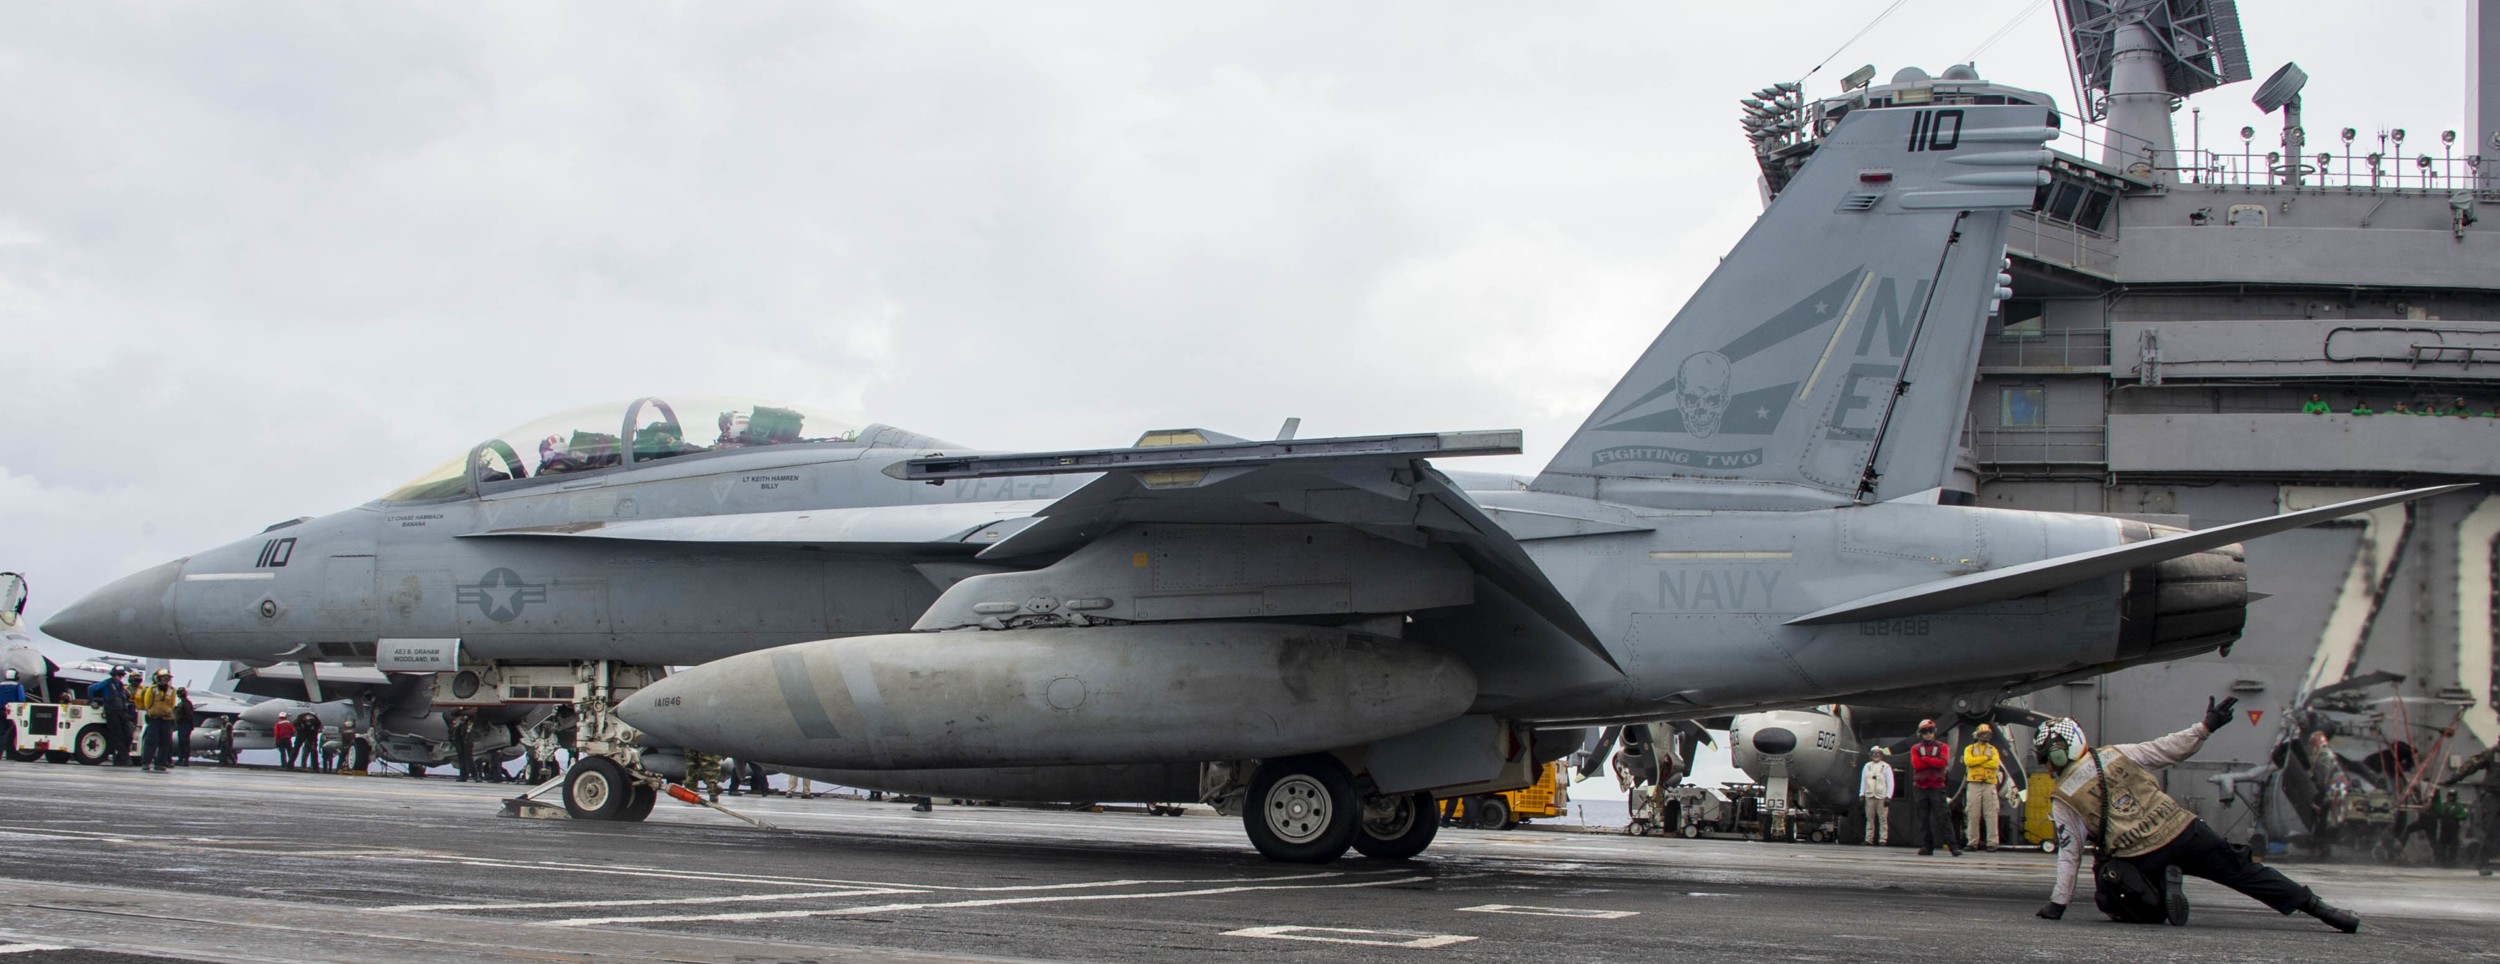 vfa-2 bounty hunters strike fighter squadron us navy f/a-18f super hornet carrier air wing cvw-2 uss carl vinson cvn-70 85